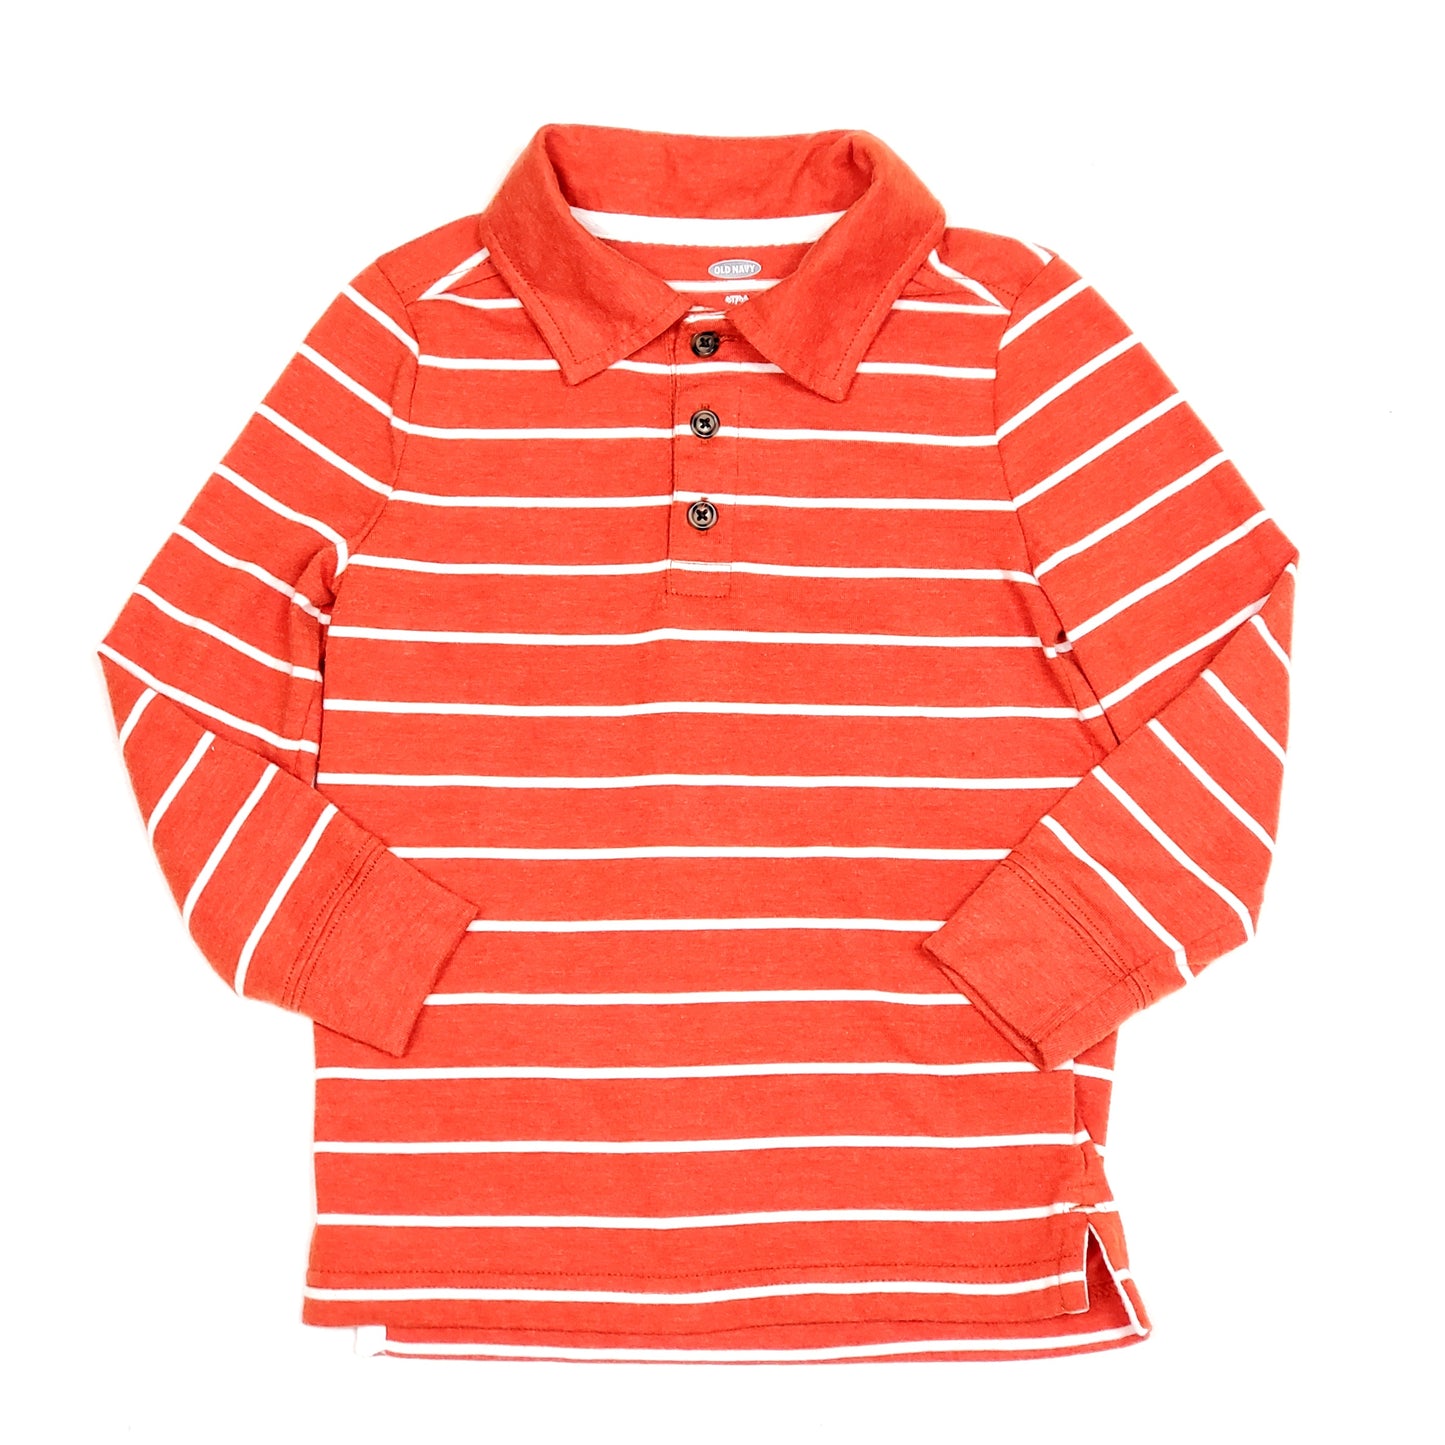 Old Navy Boys Orange White Striped Polo Shirt 4T Used View 1